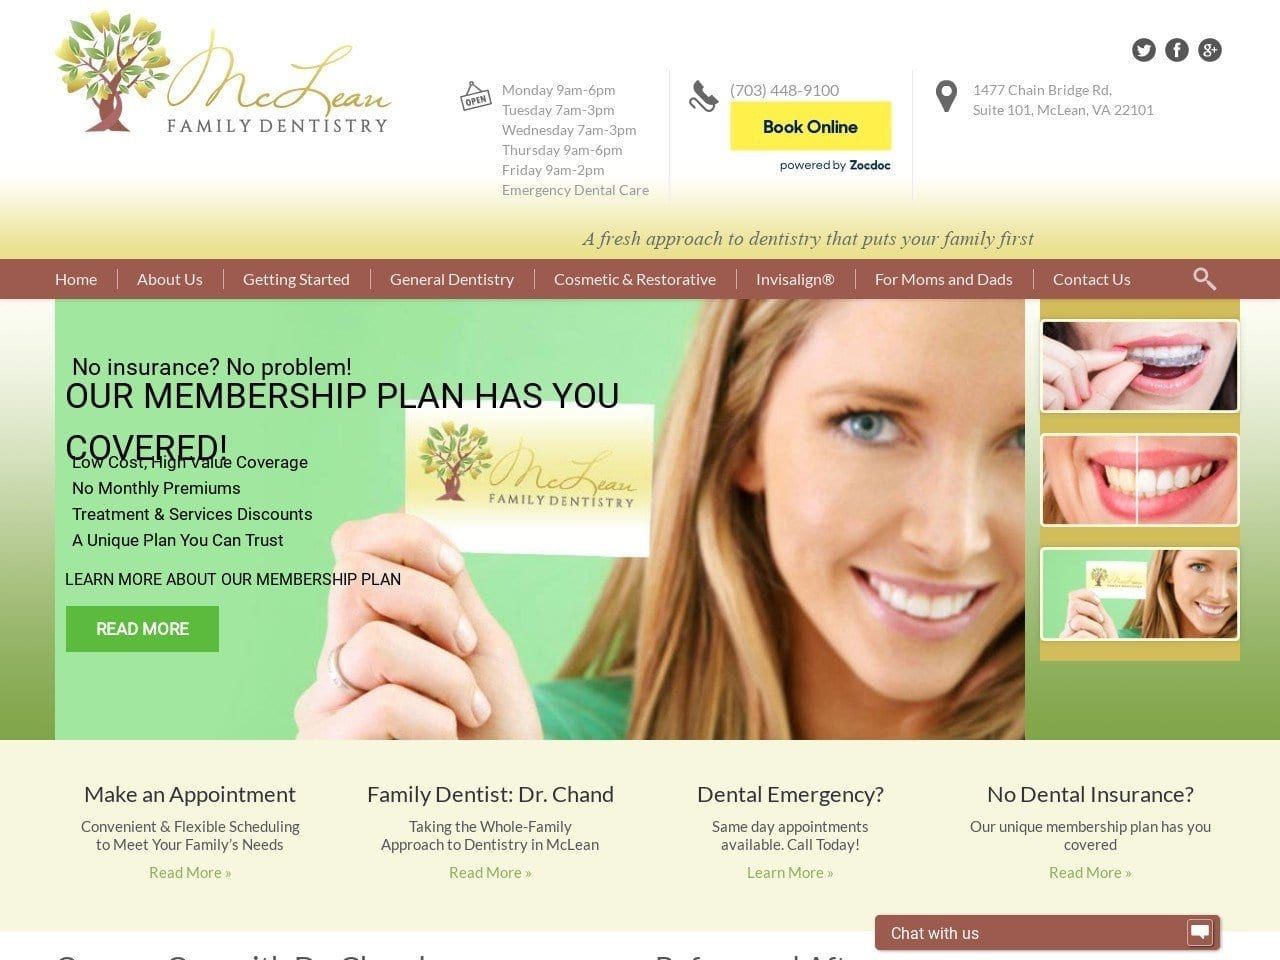 McLean Family Dentistry Website Screenshot from mcleanfamilydentistry.com